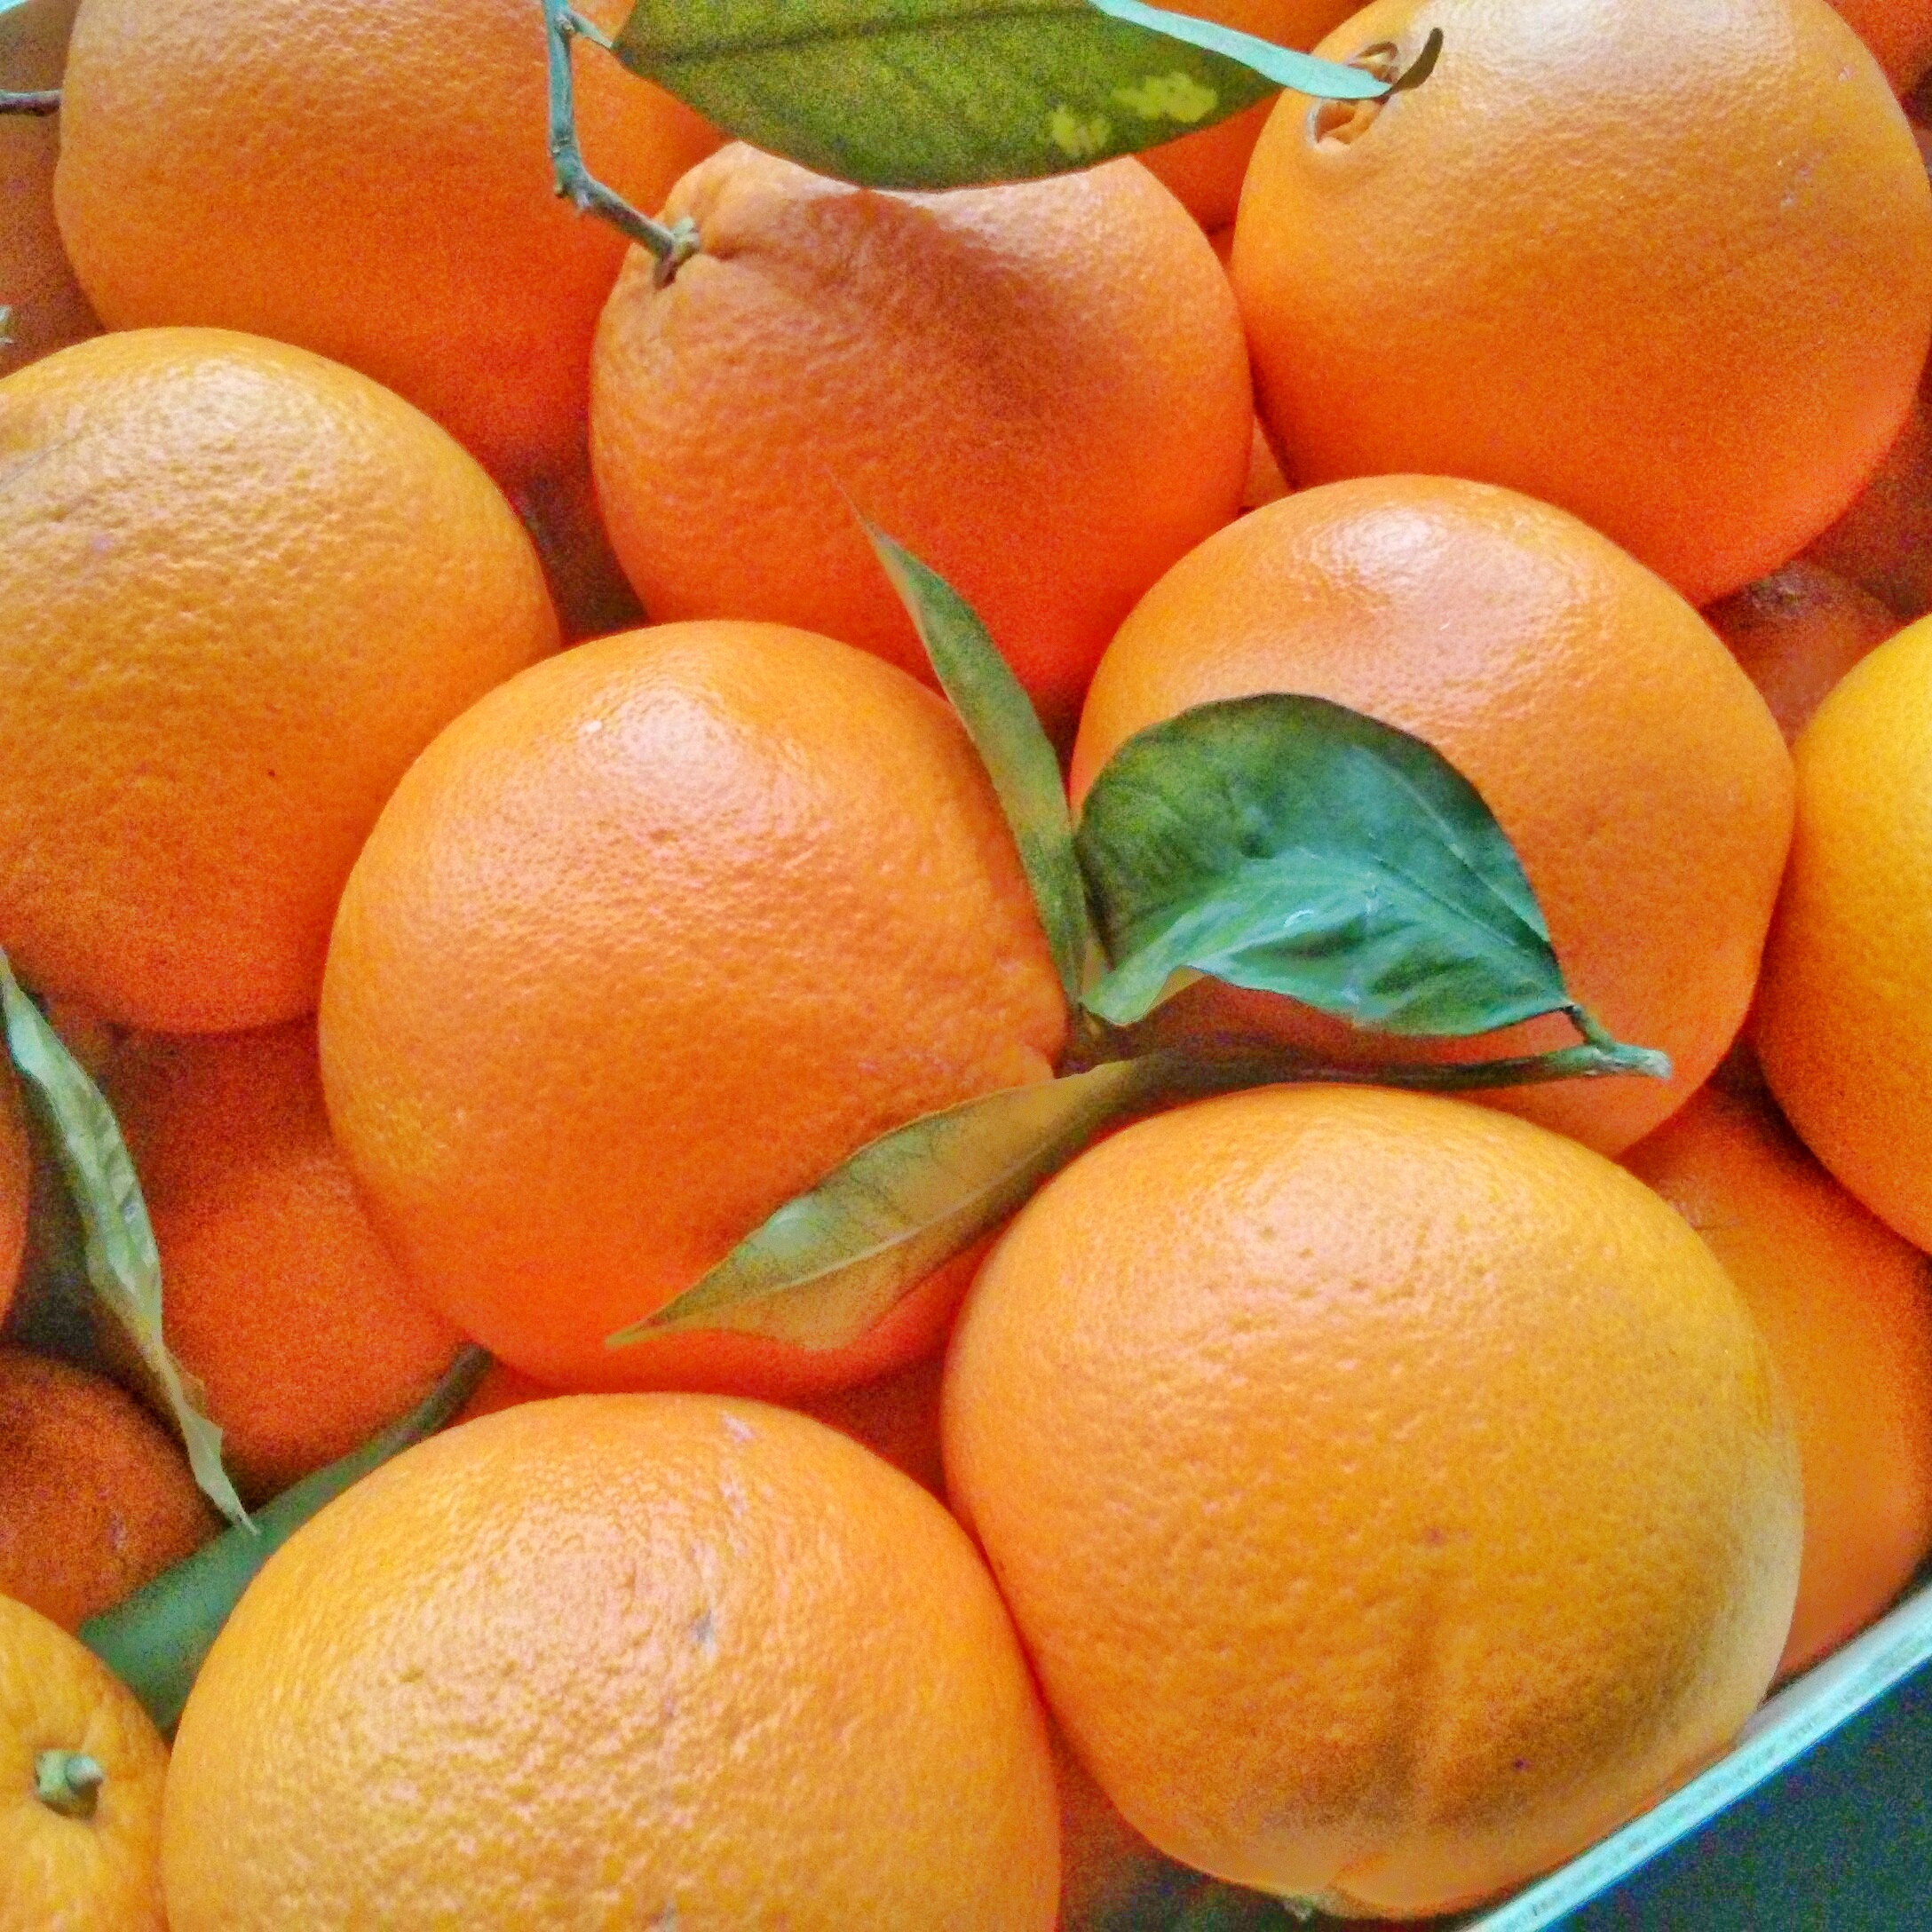 She likes oranges. Апельсин лайк. Лайк оранжевый. Citruses in English. Like Orange.